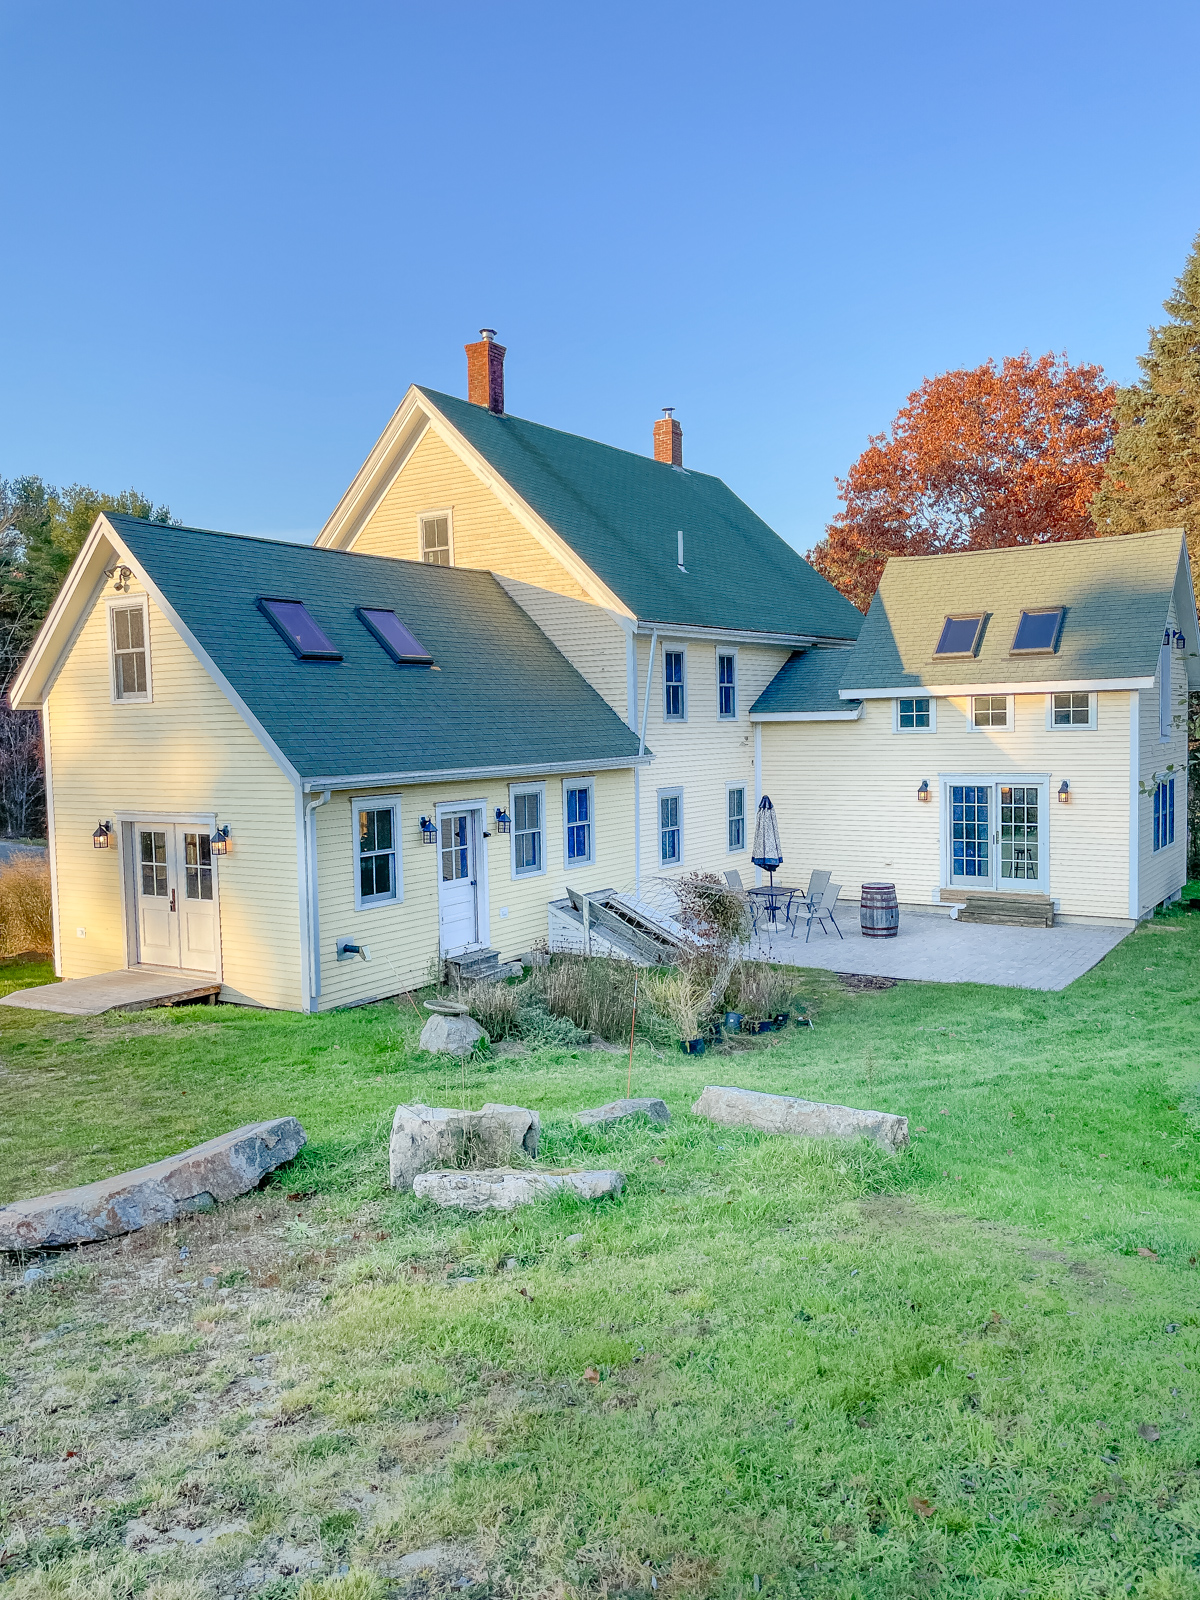 New England Colonial farmhouse